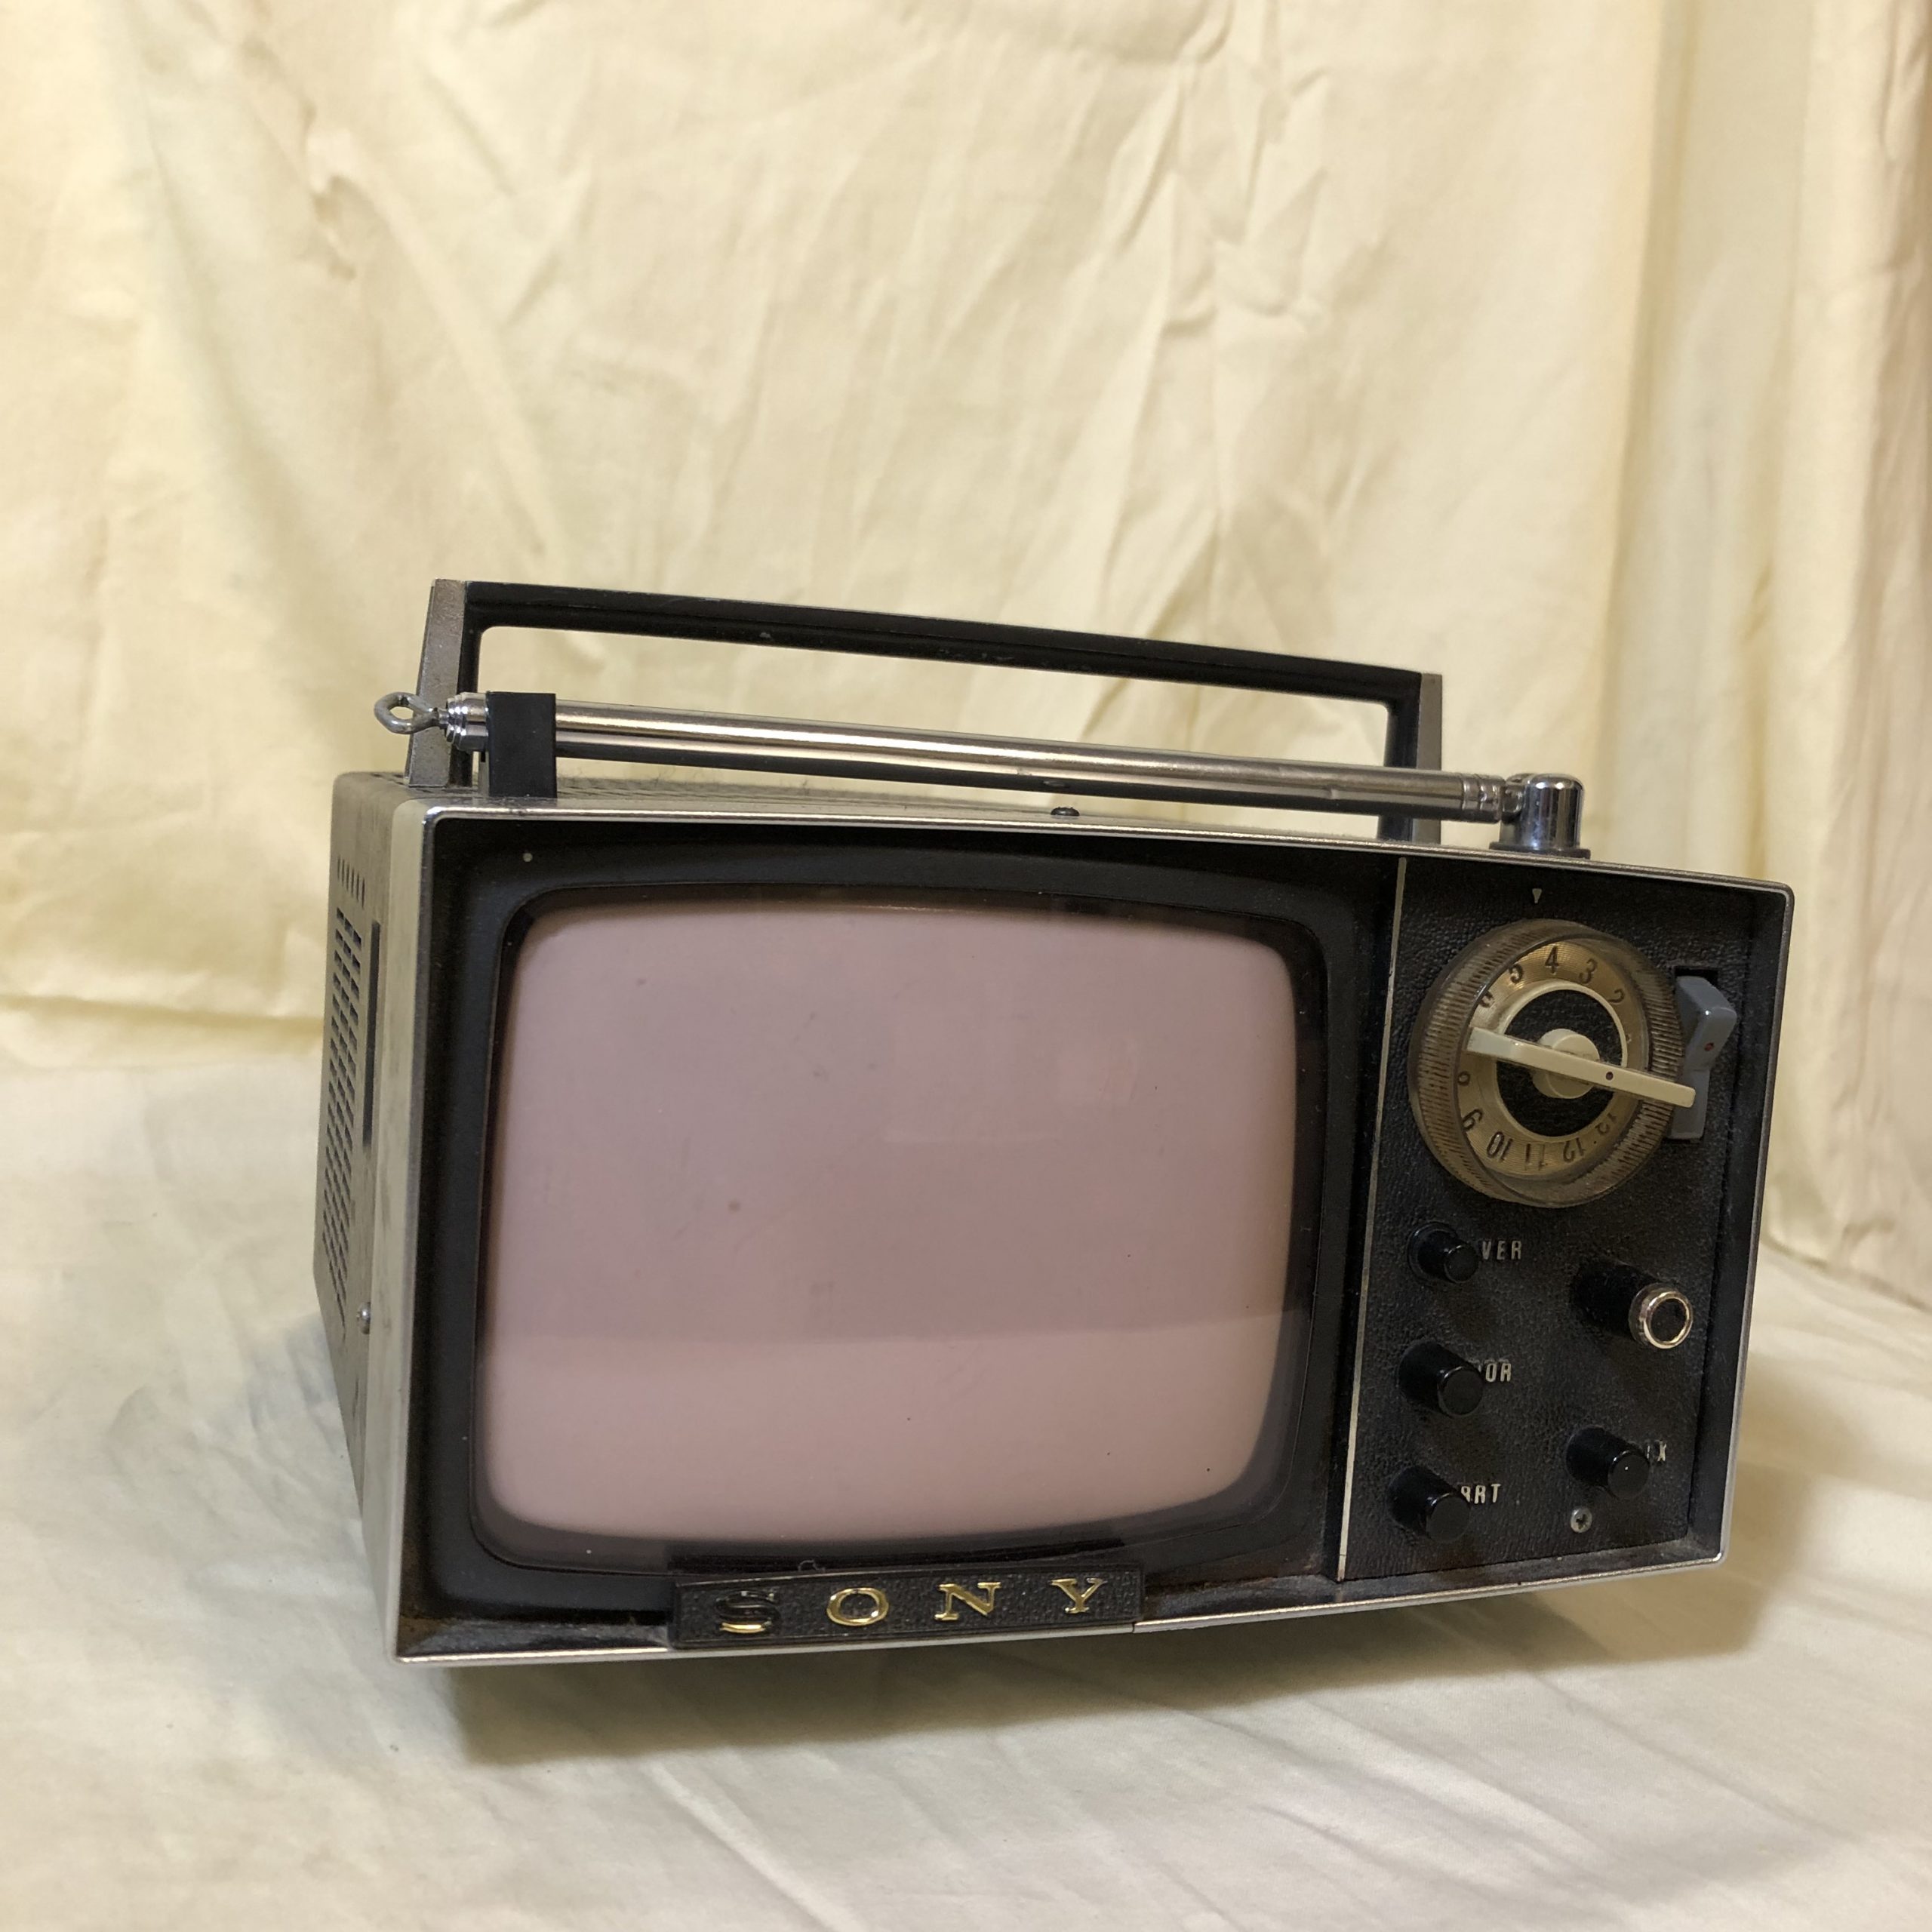 Теле микро. Японский микро телевизор 90-х. Телевизор микрон.